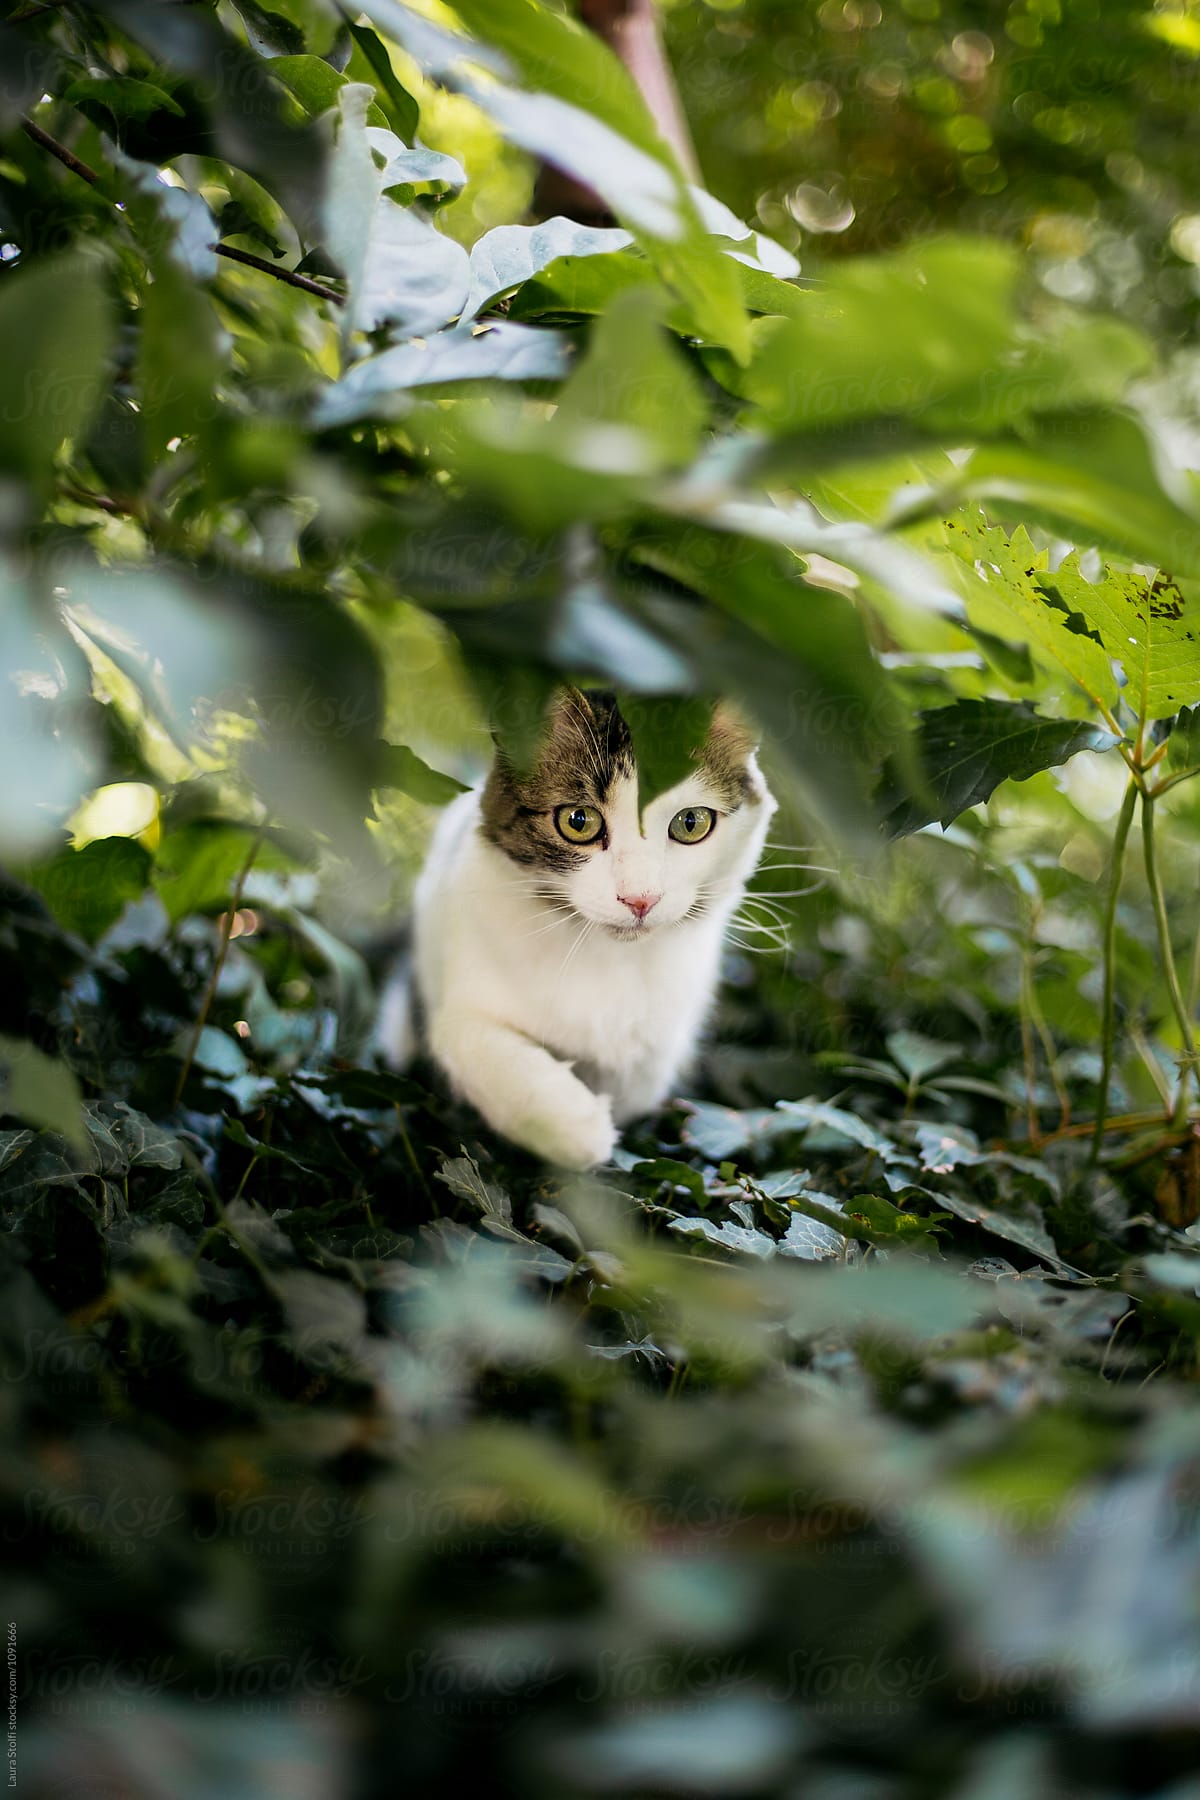 Cat explores garden walking under shrubs